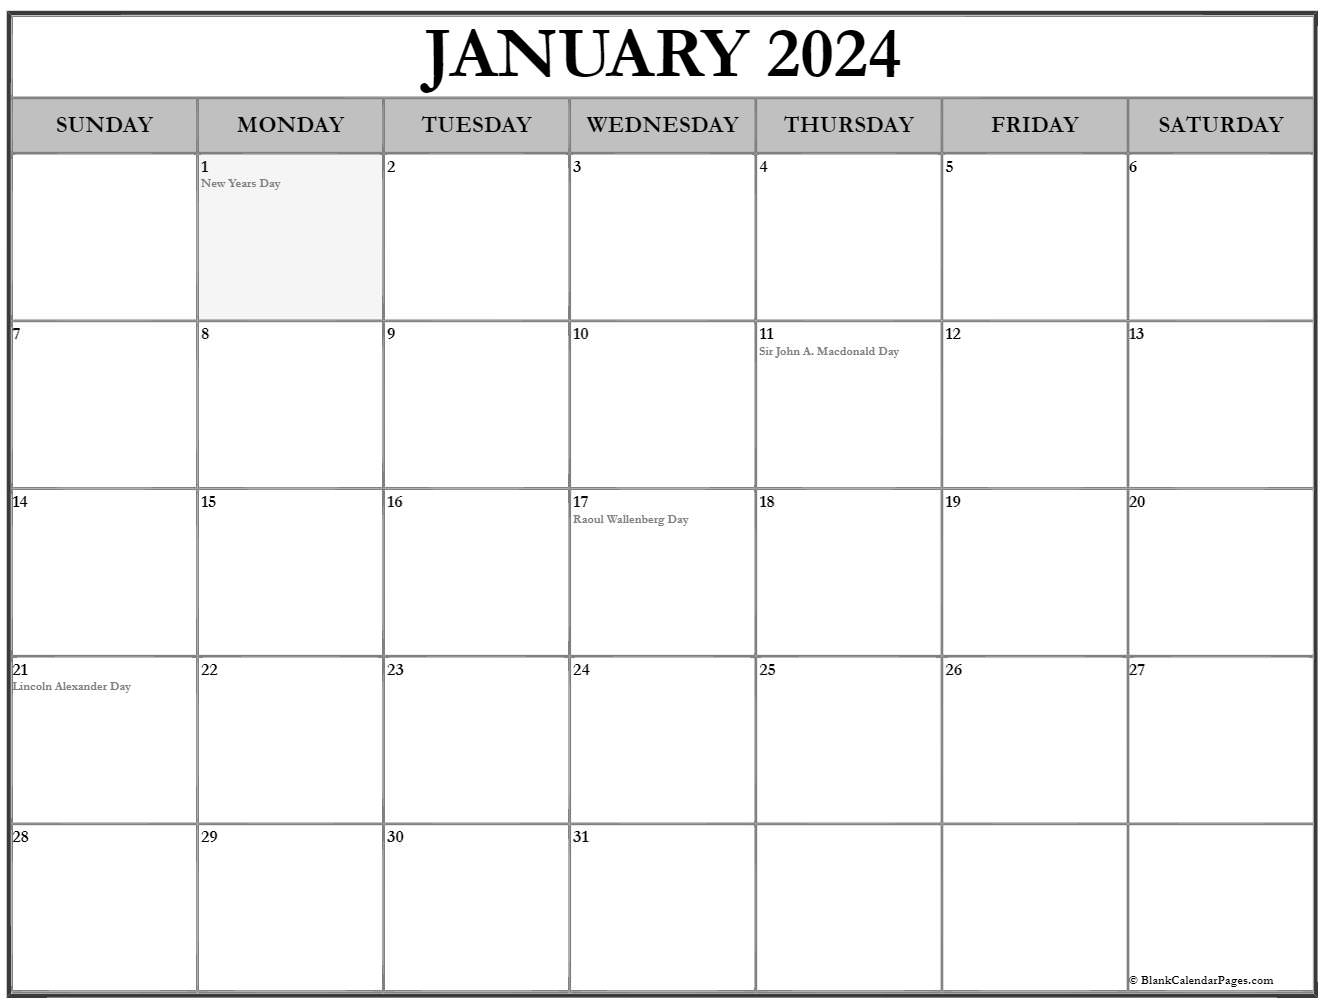 2023-calendar-templates-and-images-2023-calendar-dominik-haney